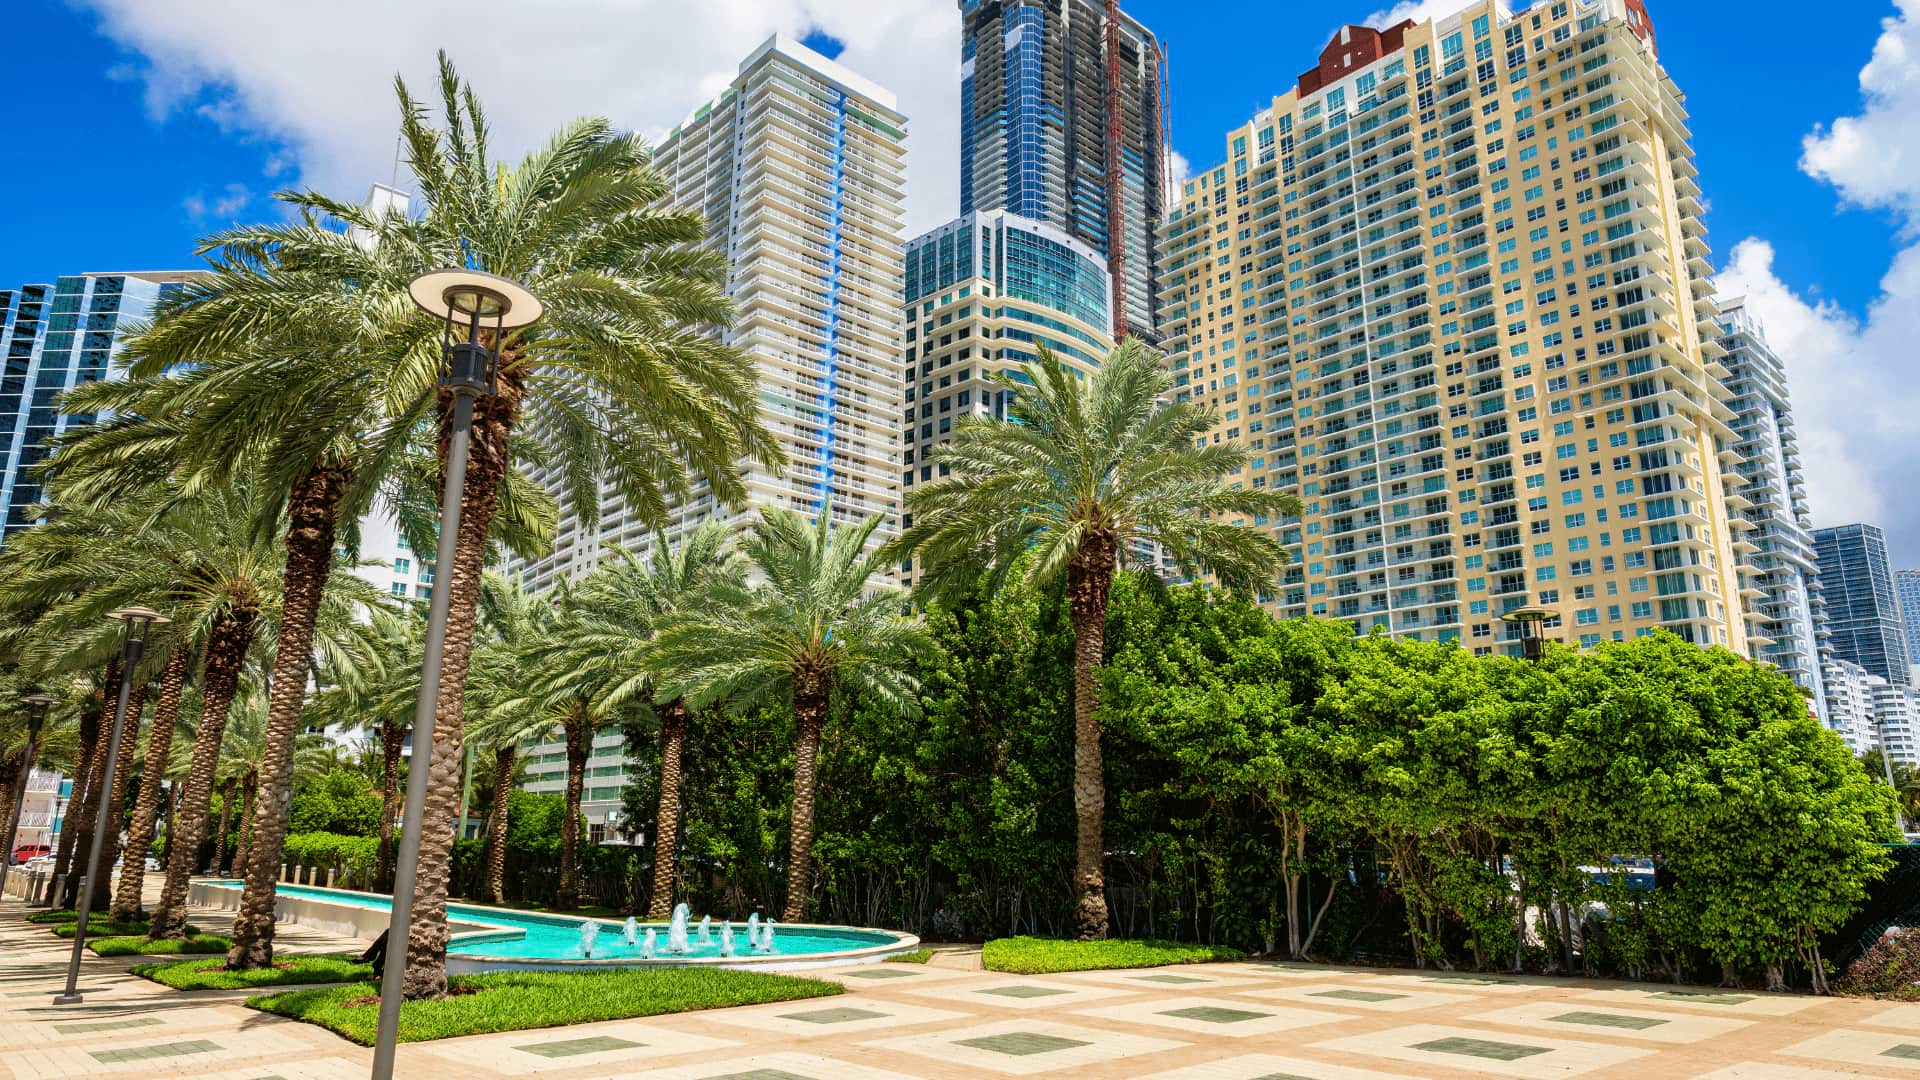 A Decade of Development: How Miami Has Transformed